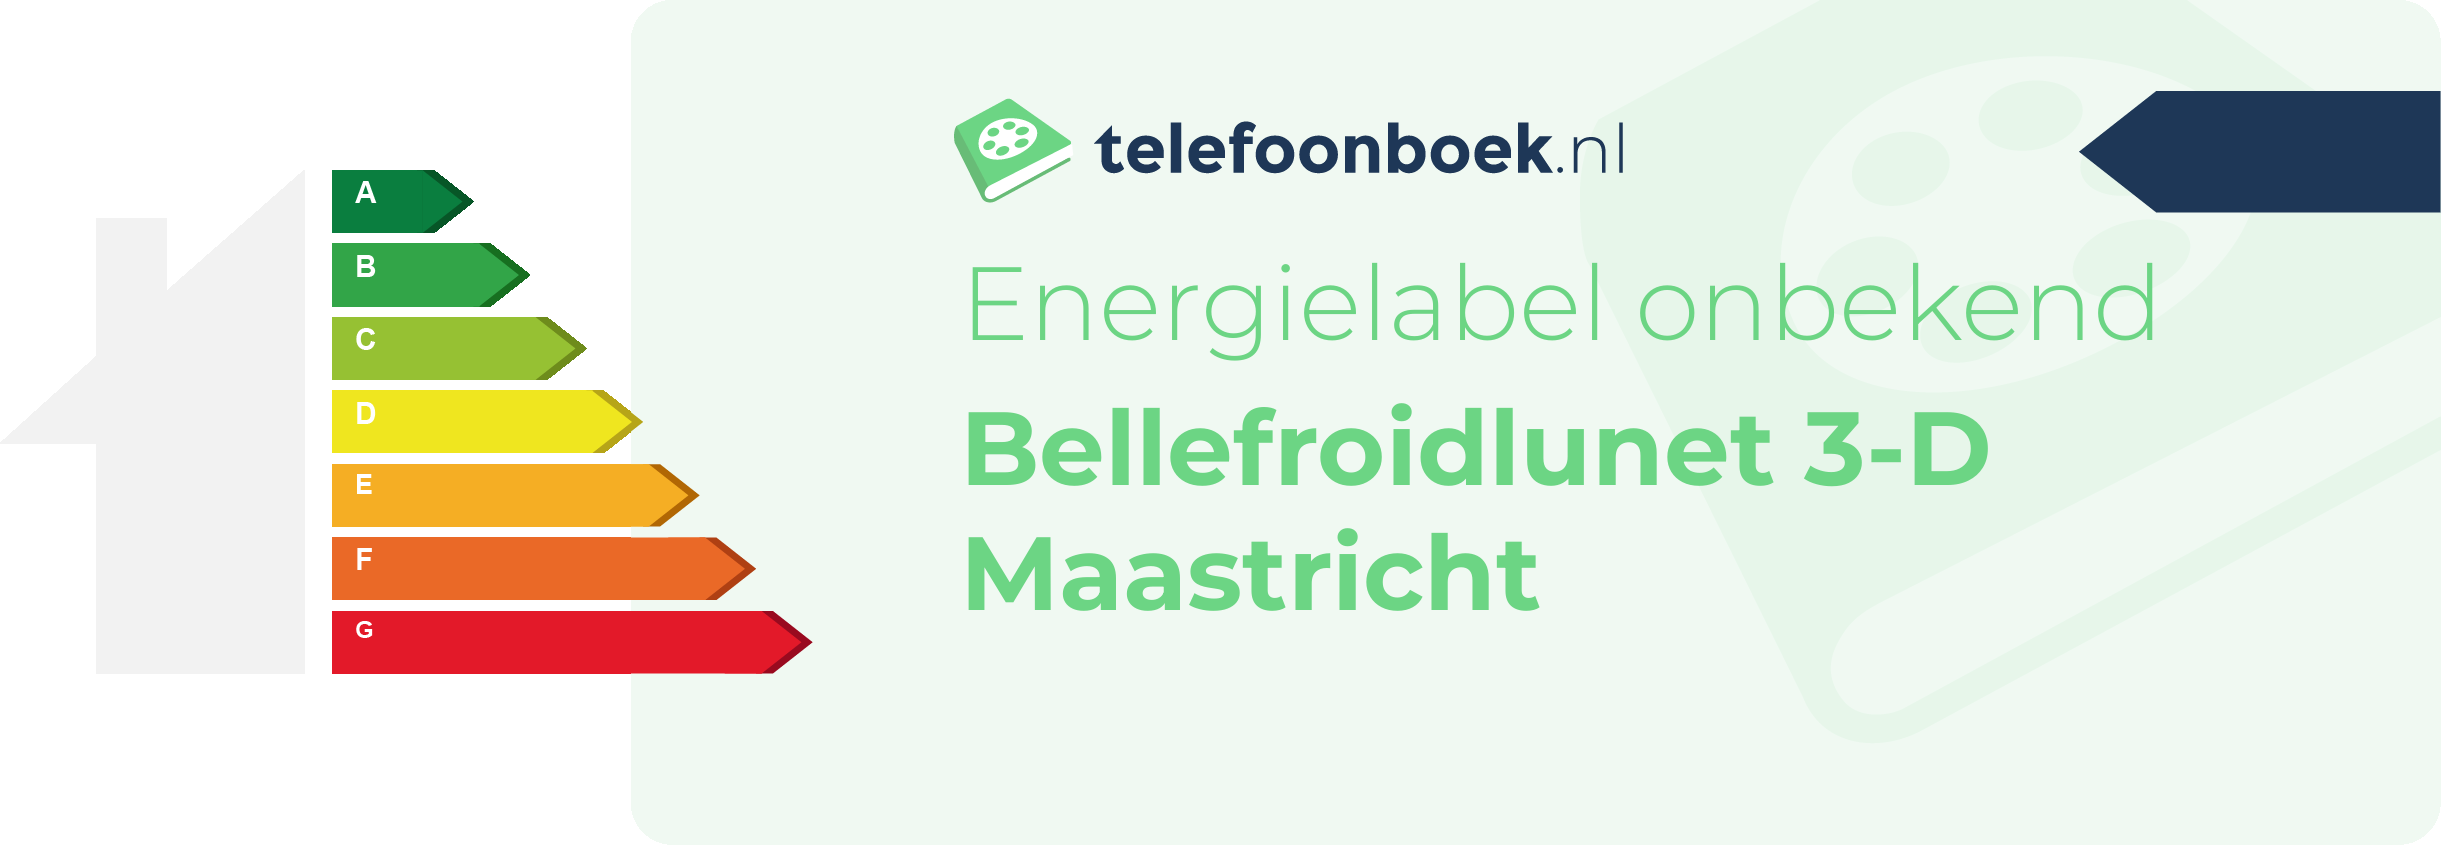 Energielabel Bellefroidlunet 3-D Maastricht